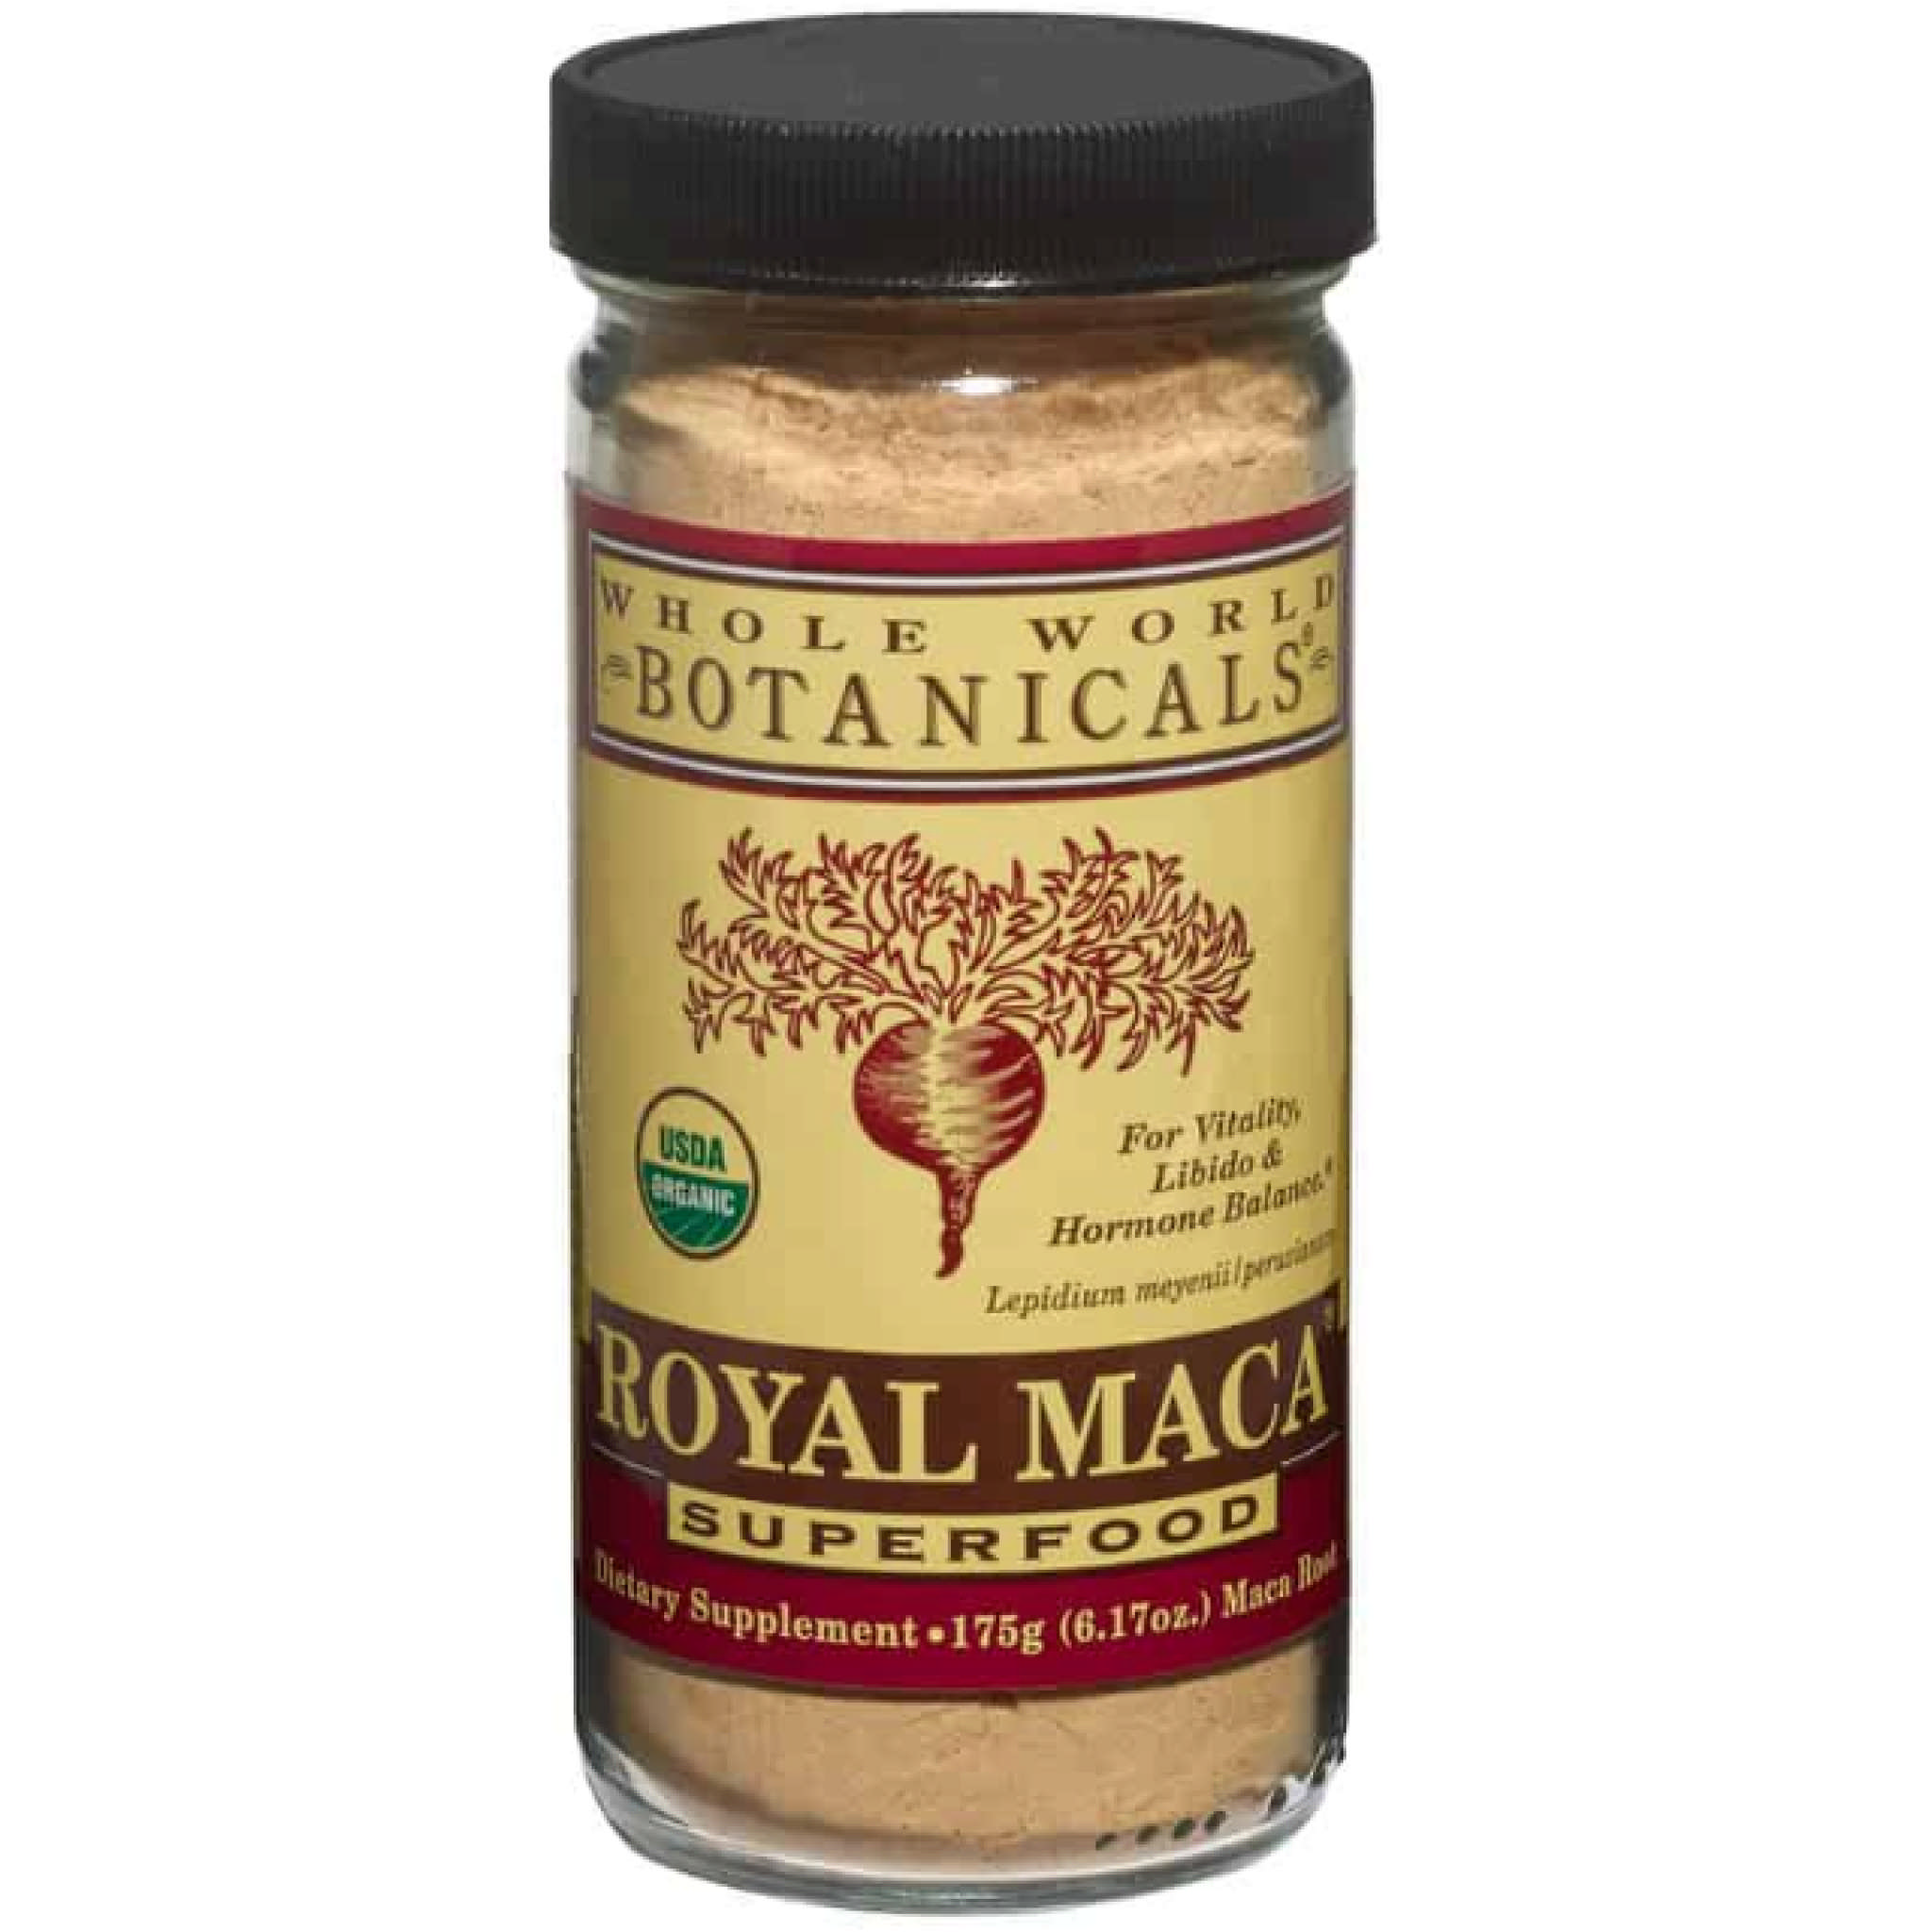 Whole World Botanicals - Royal Maca powder 175 gm